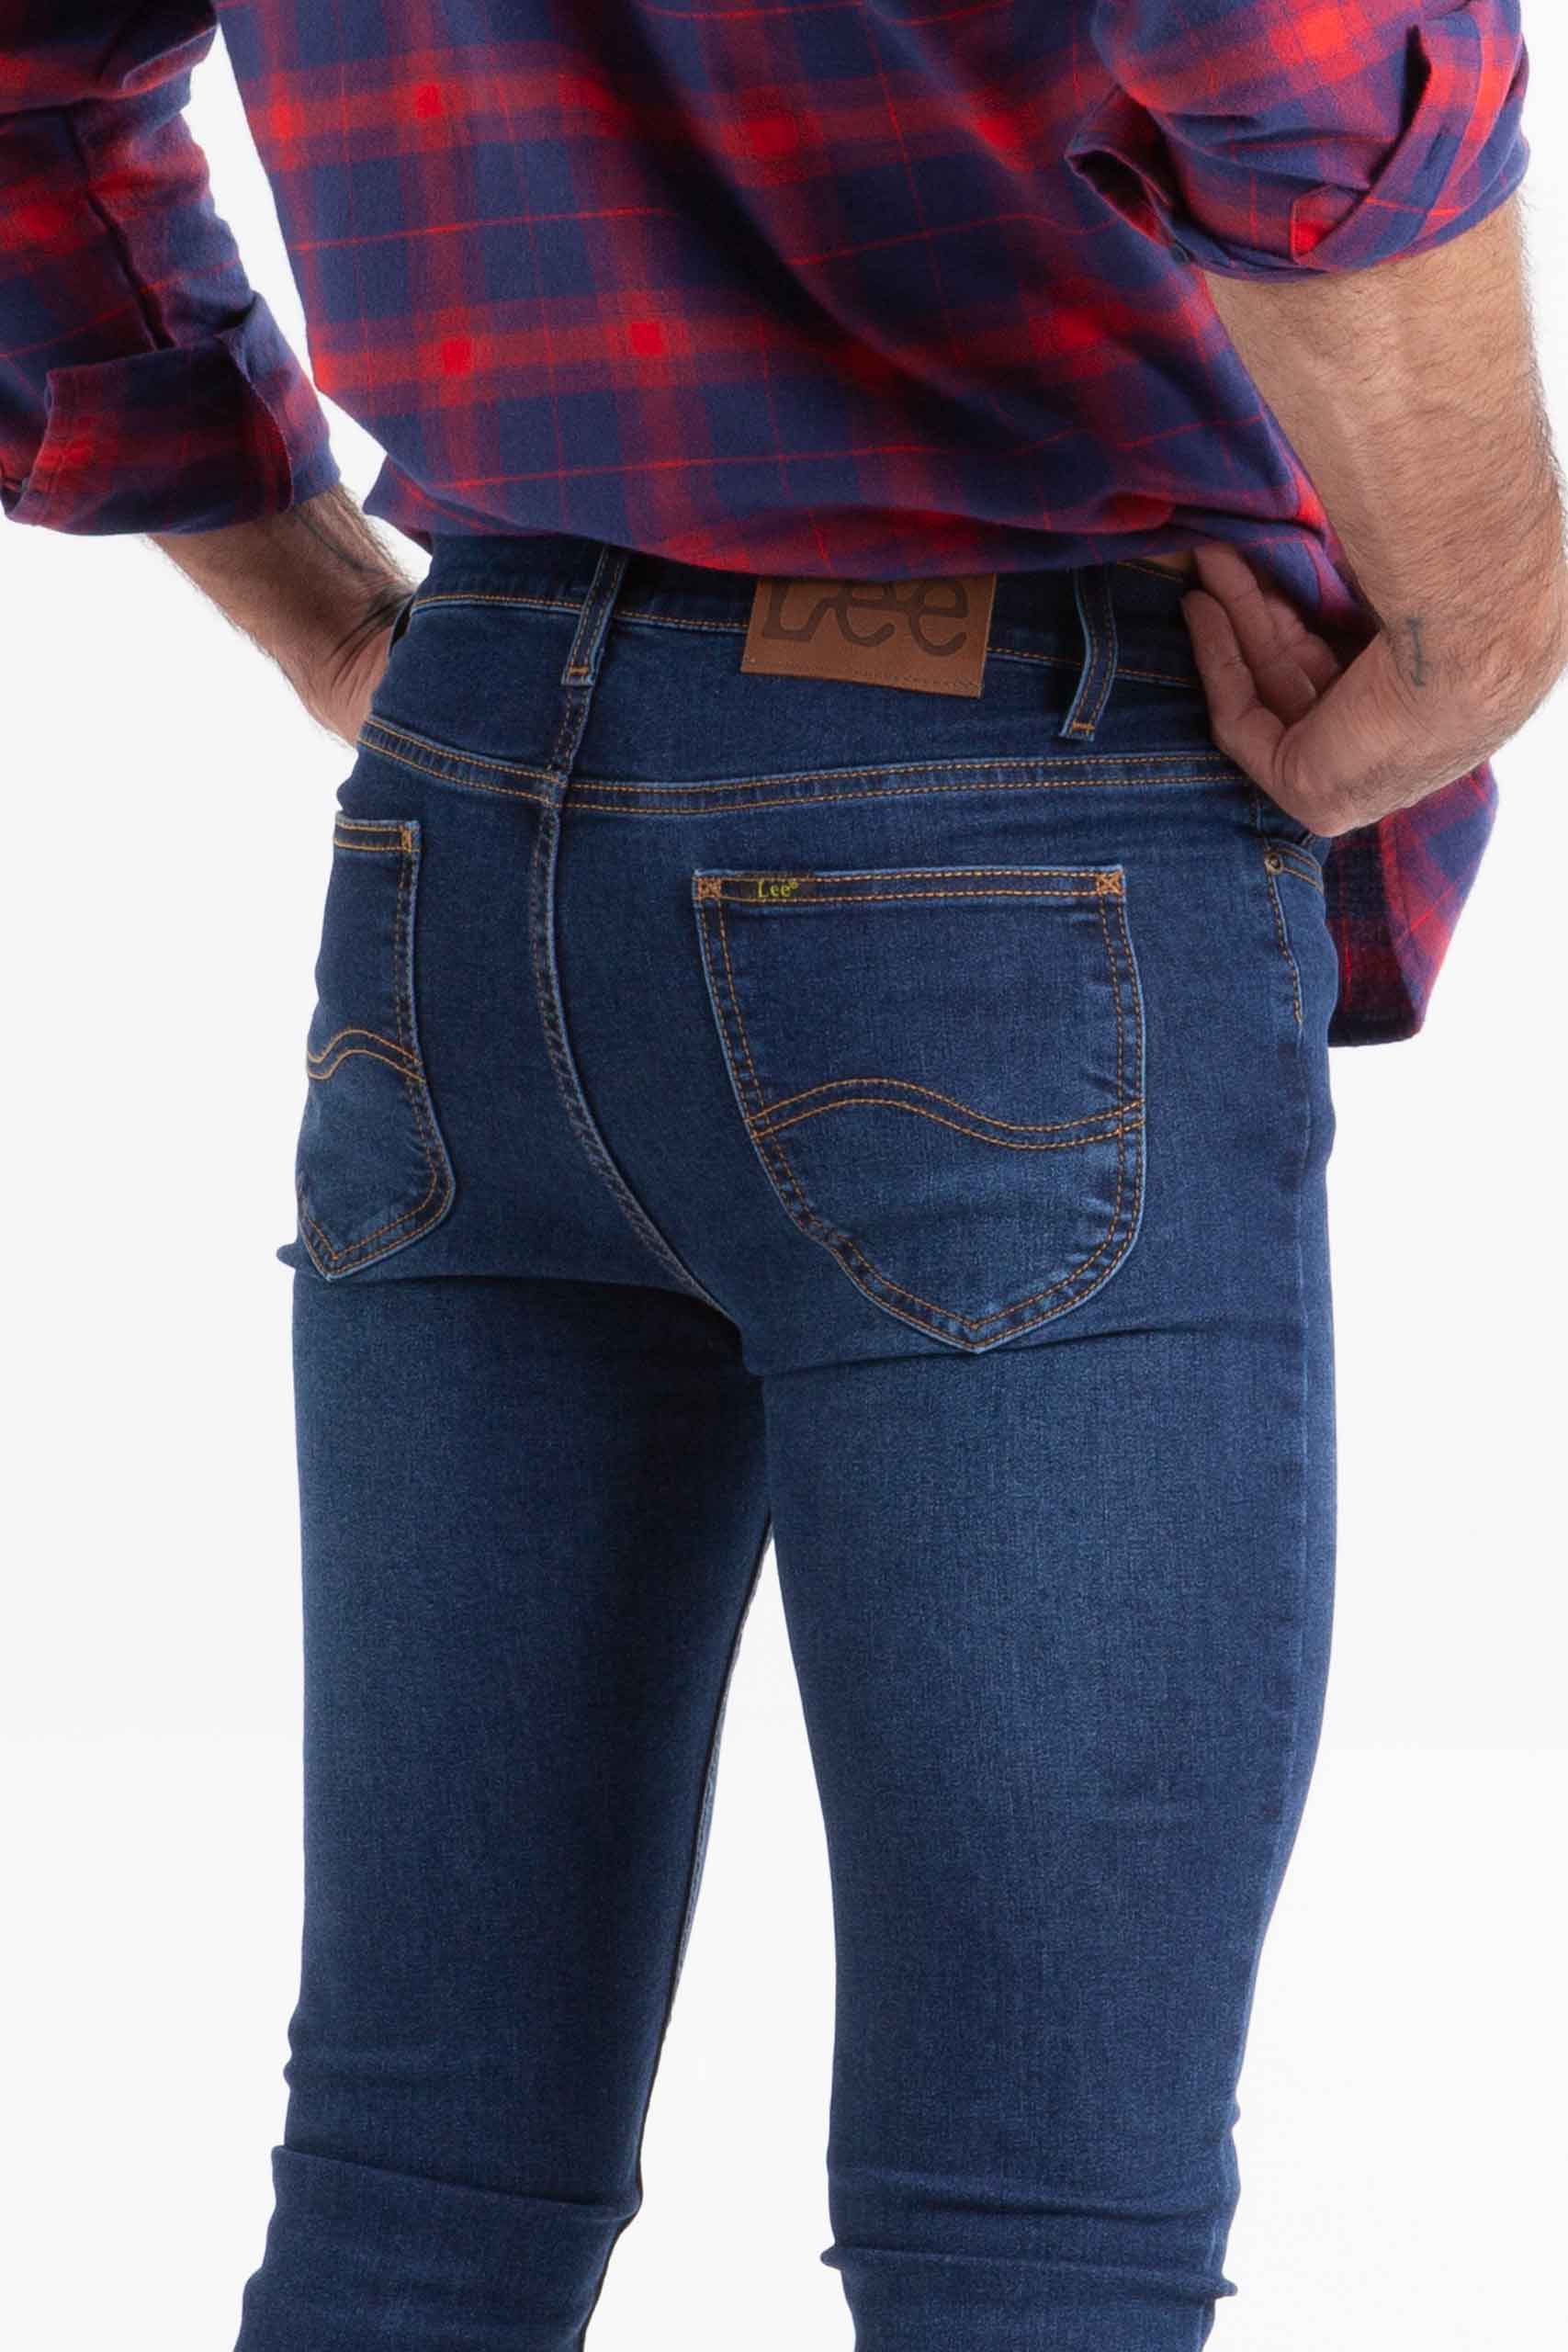 Vista posterior Jean de color pepper de marca lee